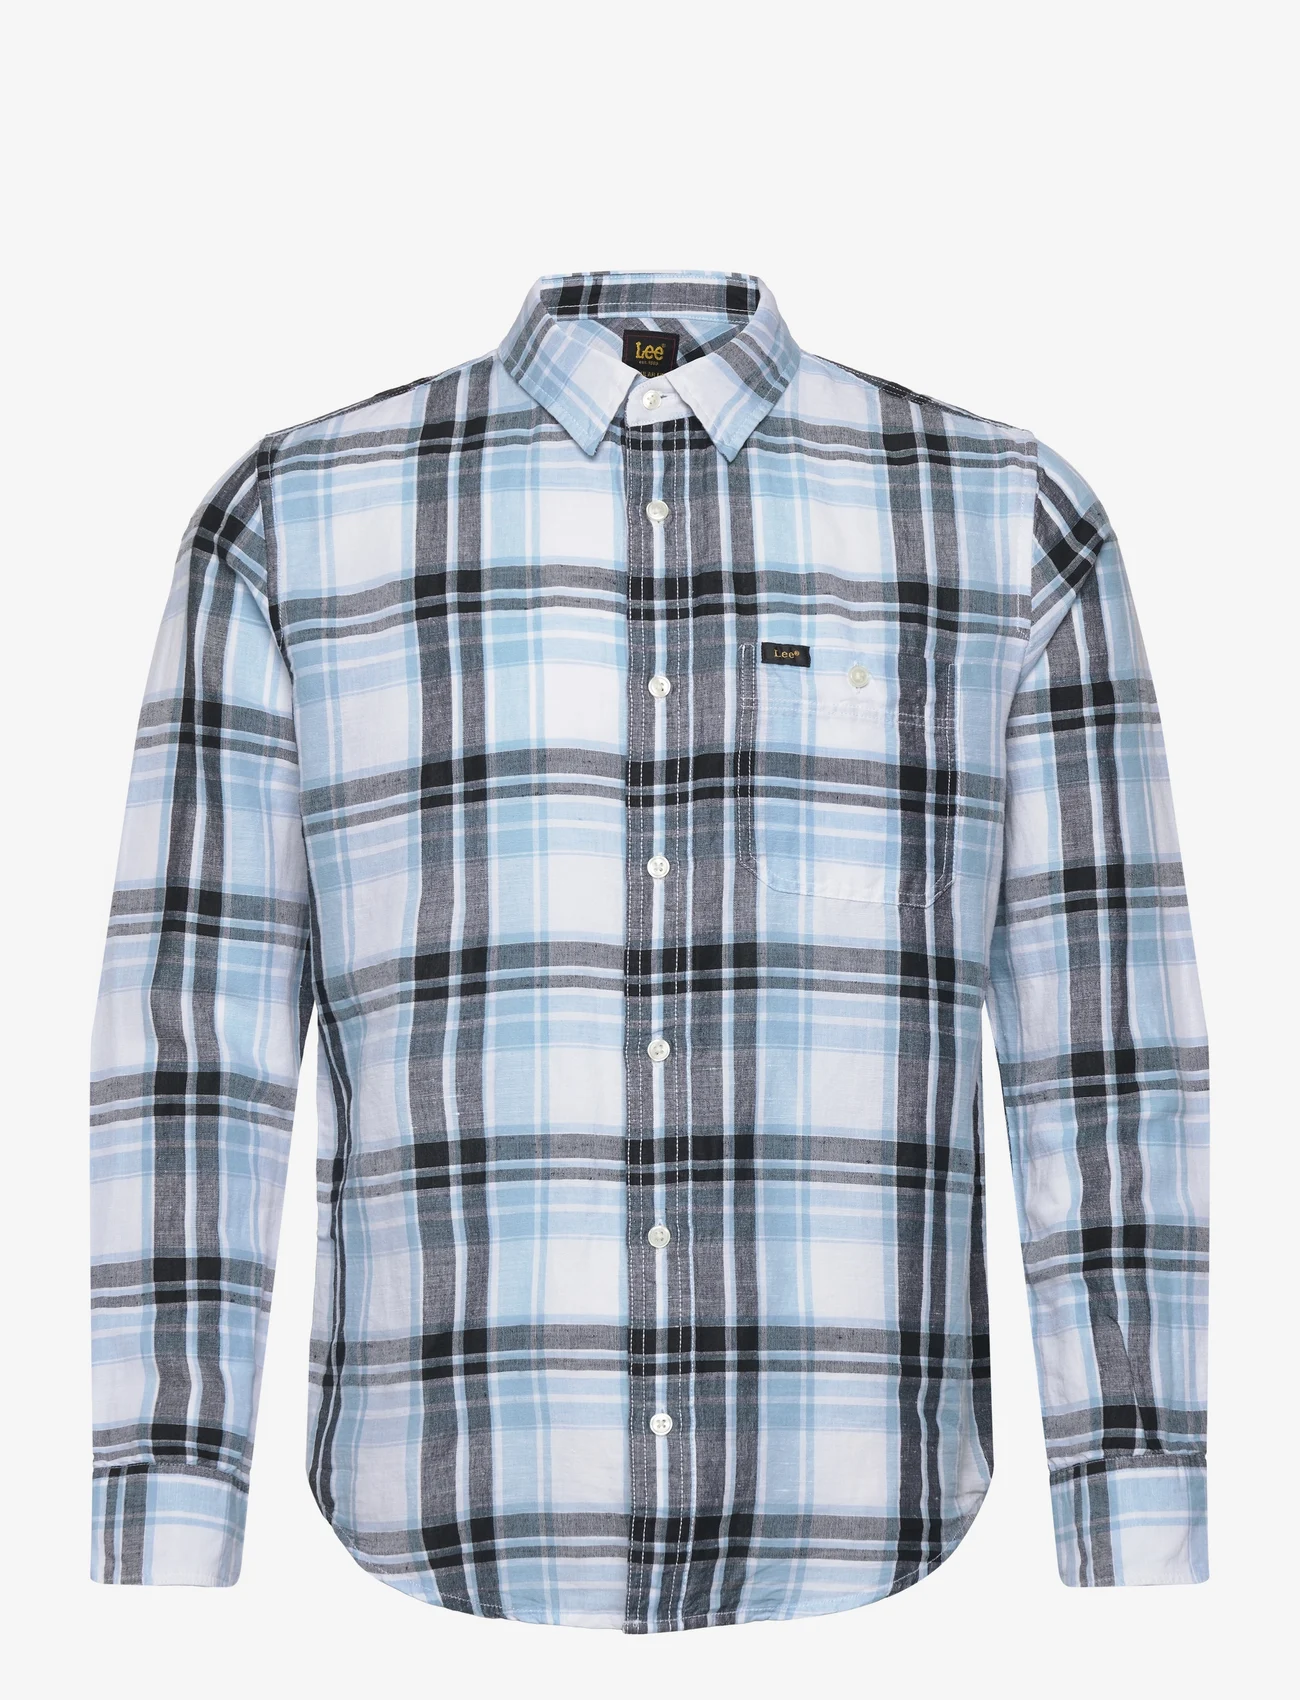 Lee Jeans - LEESURE SHIRT - checkered shirts - preppy blue - 0